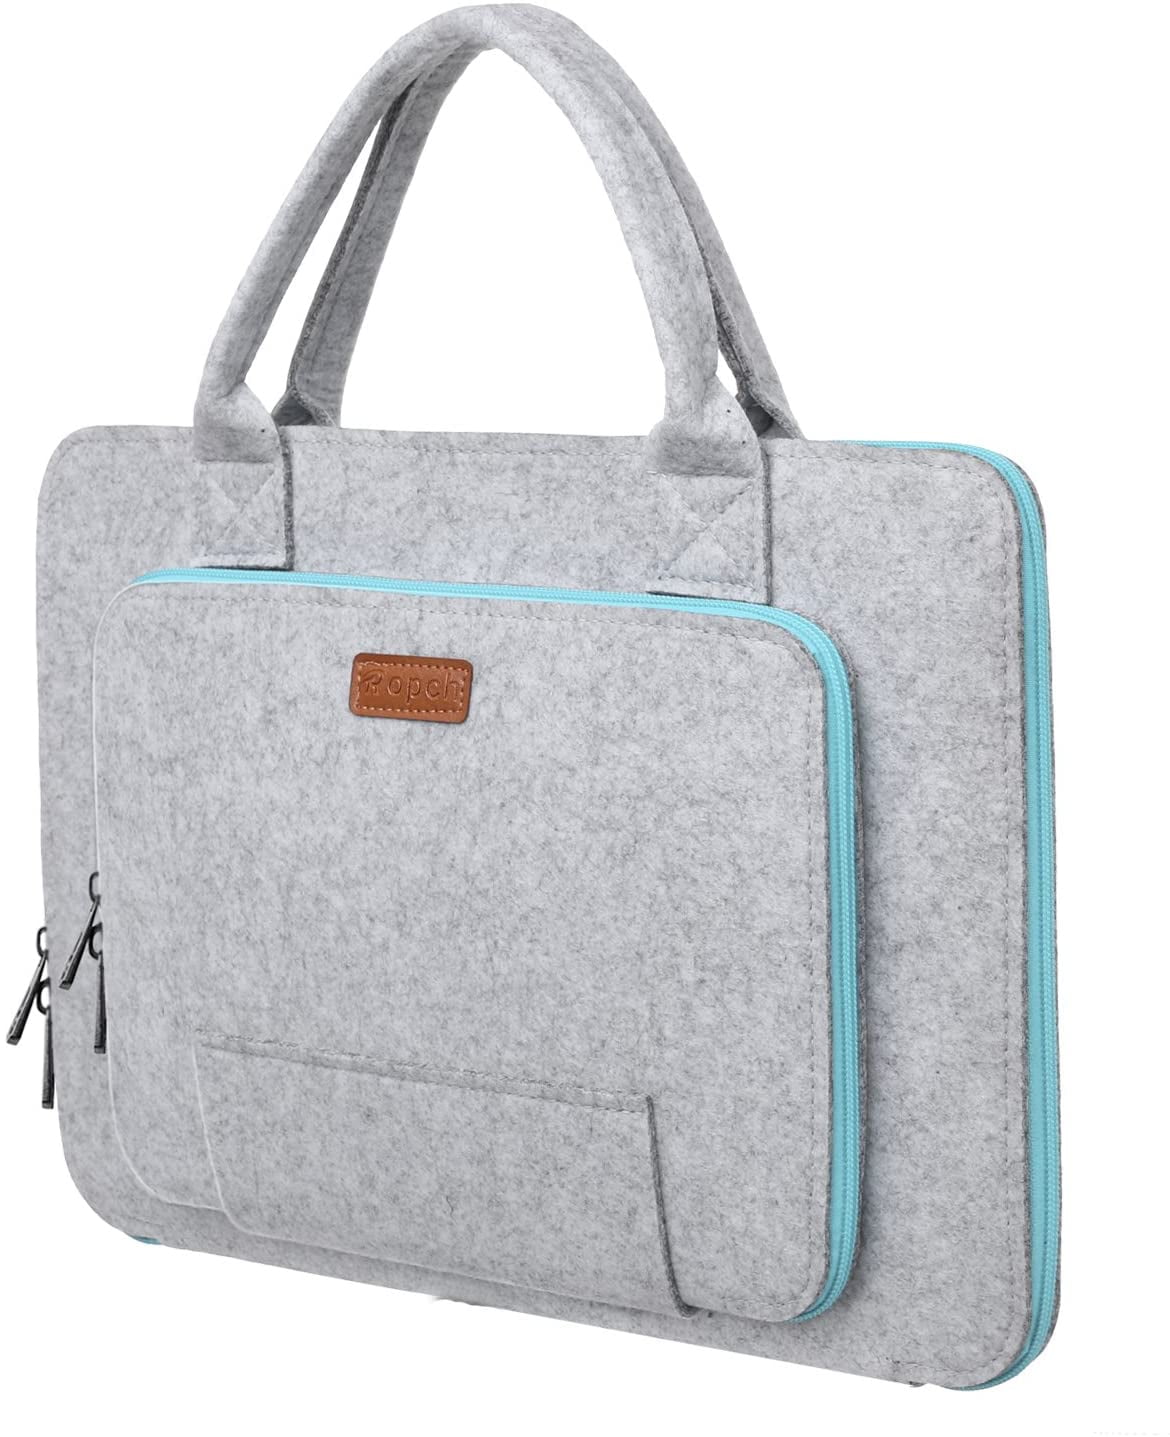 Laptop Bag Case For Asus Vivobook Flip 14 Rog Zephyrus Strix Scar 15 Zipper  Handbag Sleeve Zenbook S 13.3 K570ud 15.6 S Pouch - Laptop Bags & Cases -  AliExpress